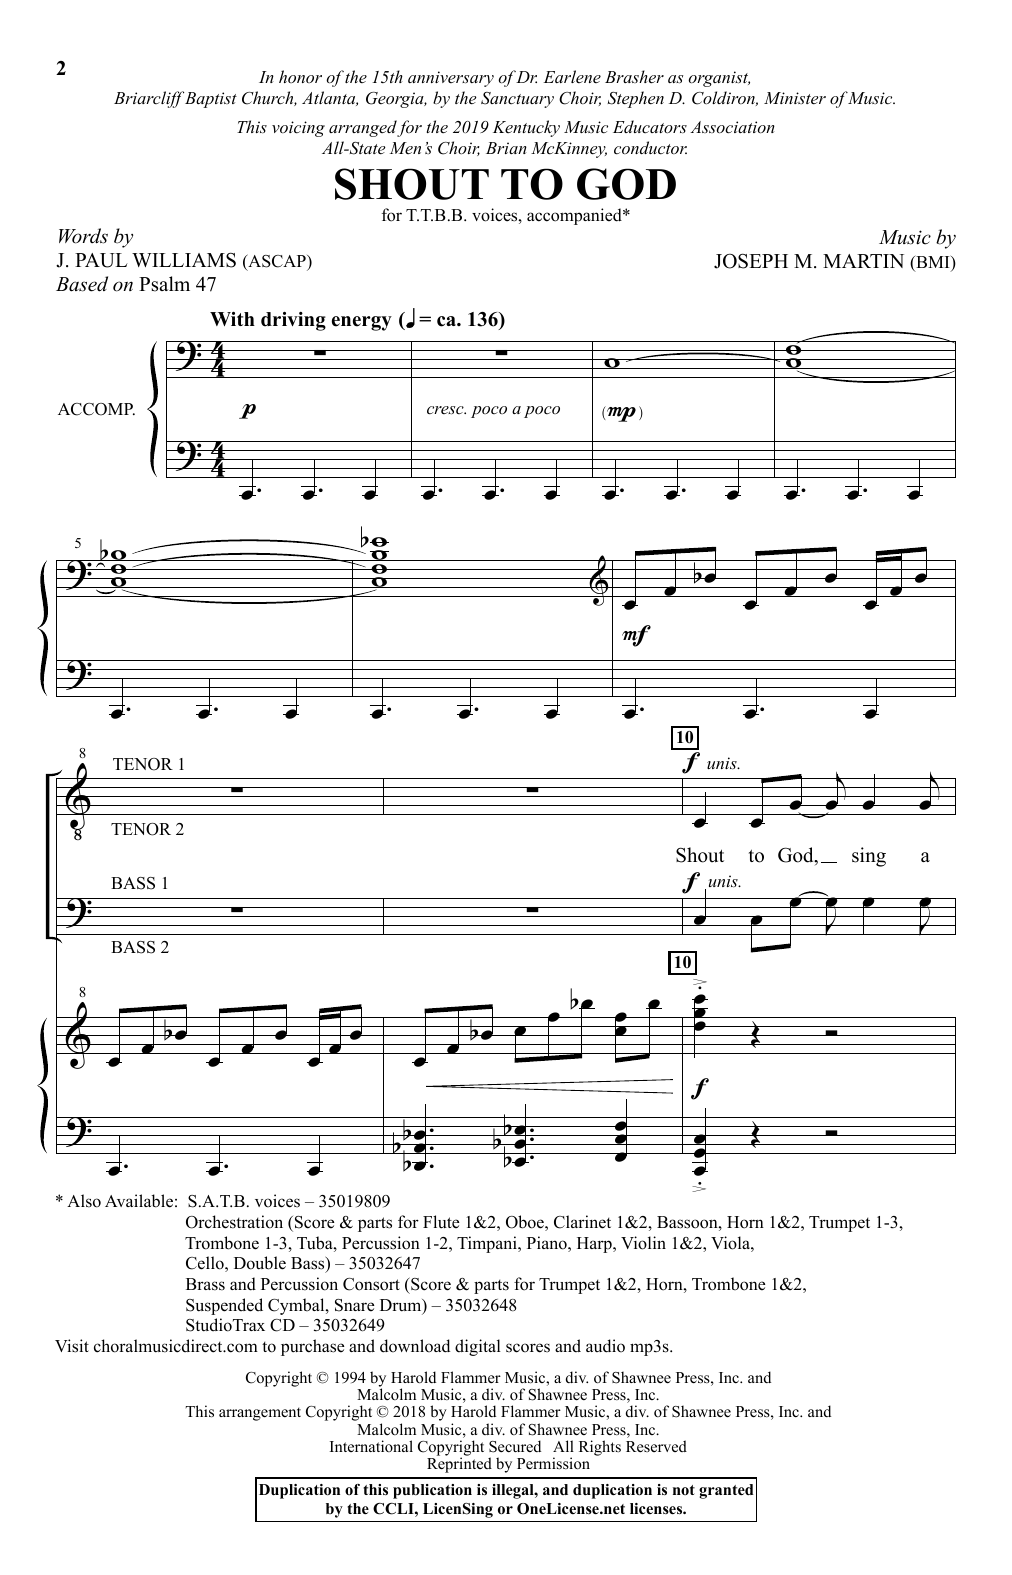 J. Paul Williams & Joseph M. Martin Shout To God sheet music notes and chords arranged for TTBB Choir